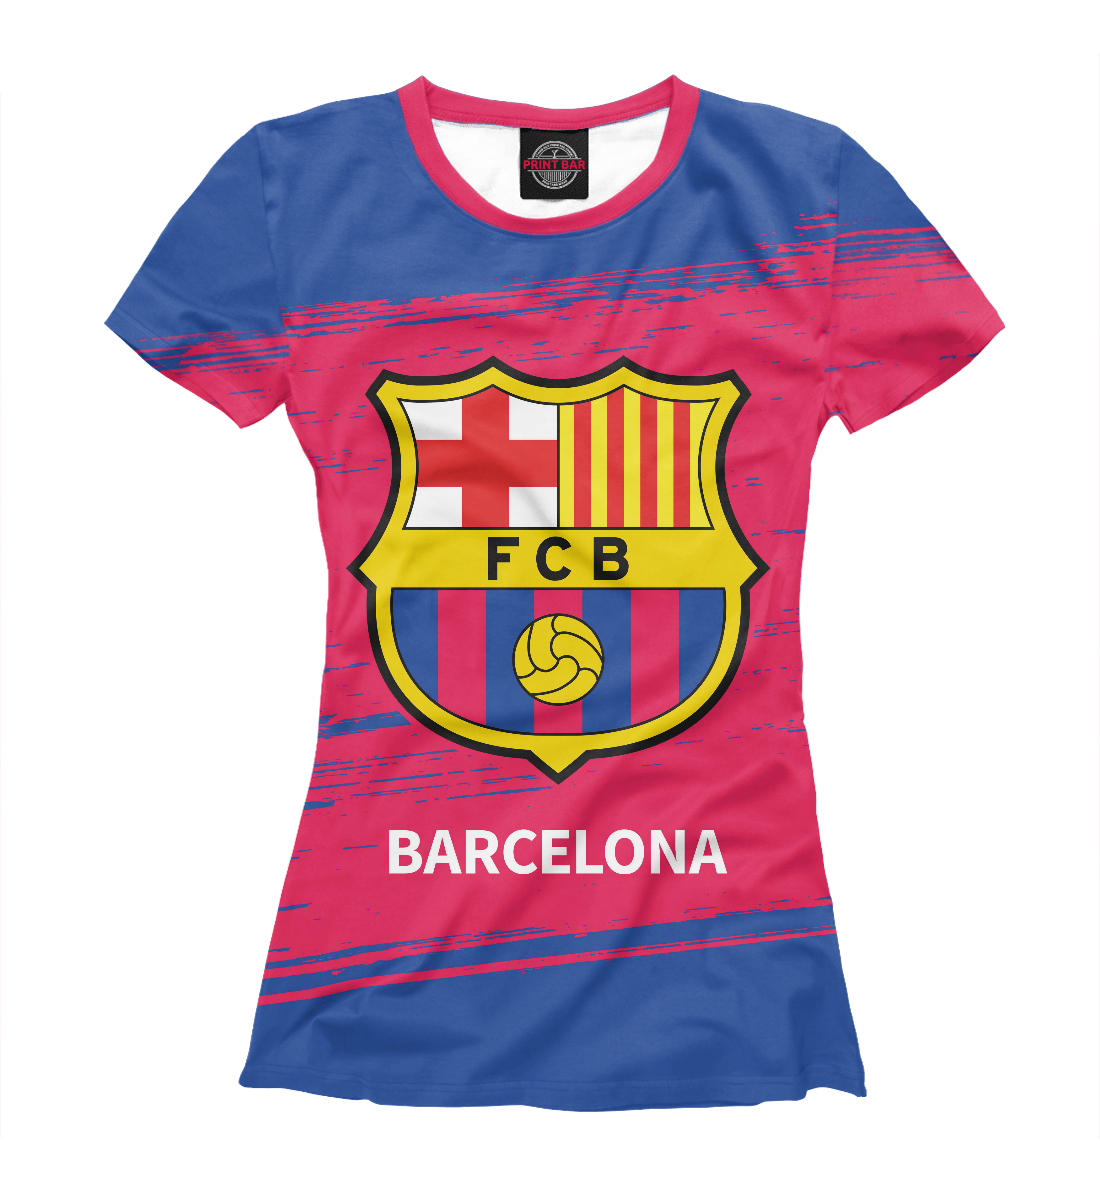 Футболка Barcelona / Барселона для девочек, артикул: BAR-635352-fut-1mp